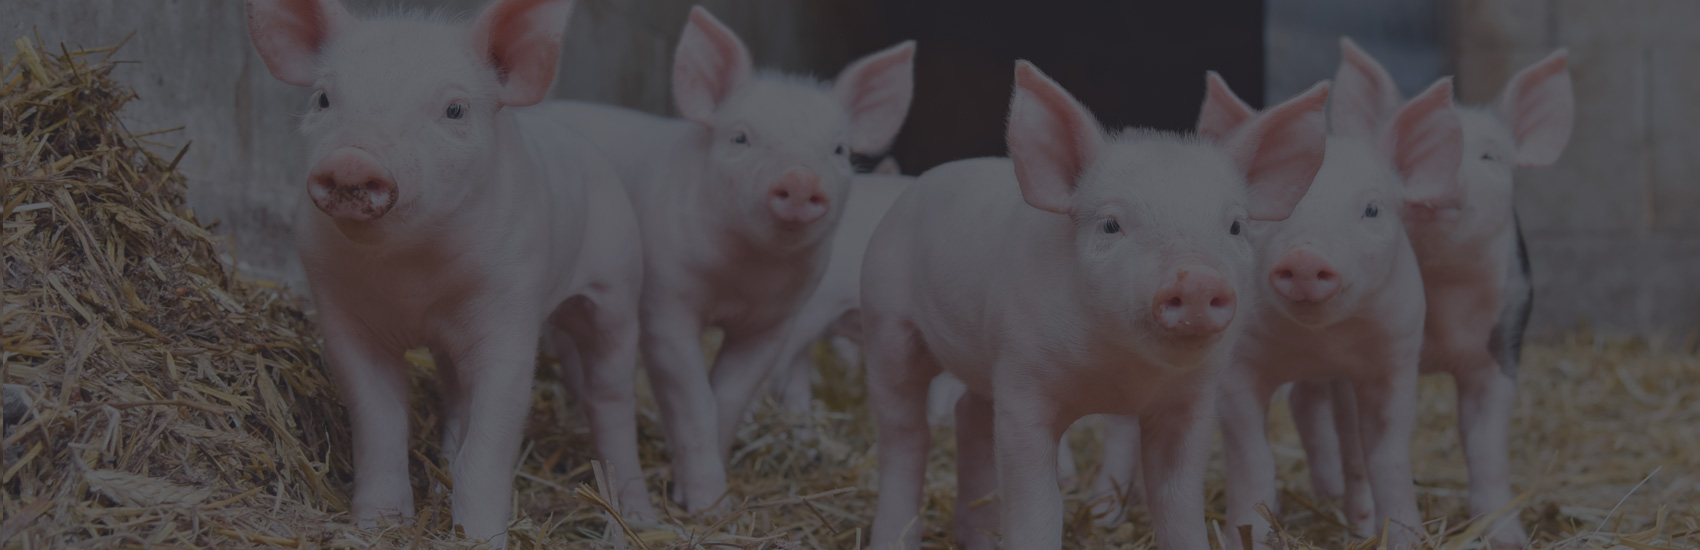 The pork industry goes through Les Cèdres